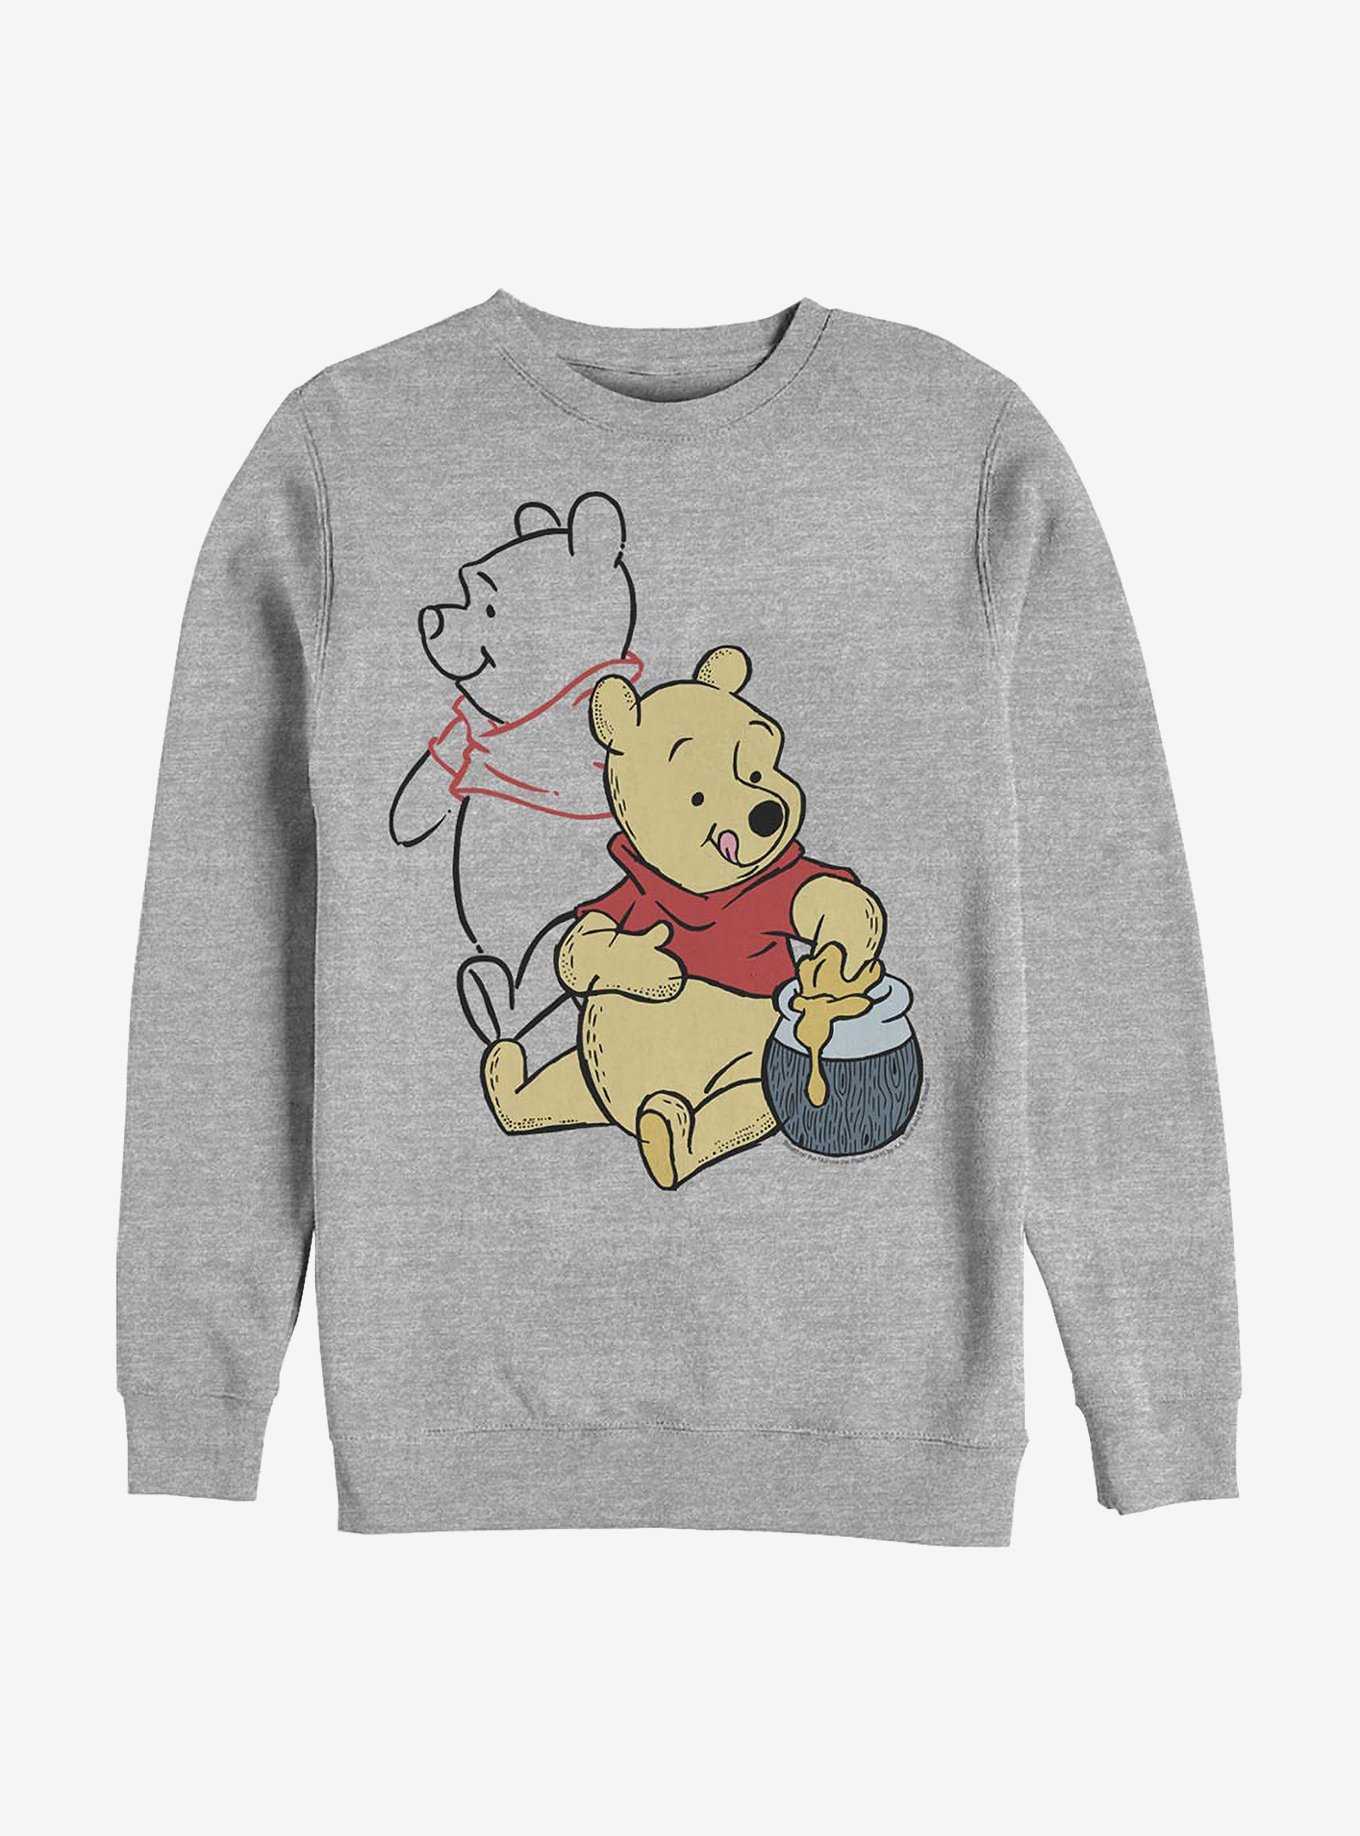 Disney Winnie The Pooh Line Art Sweatshirt, , hi-res